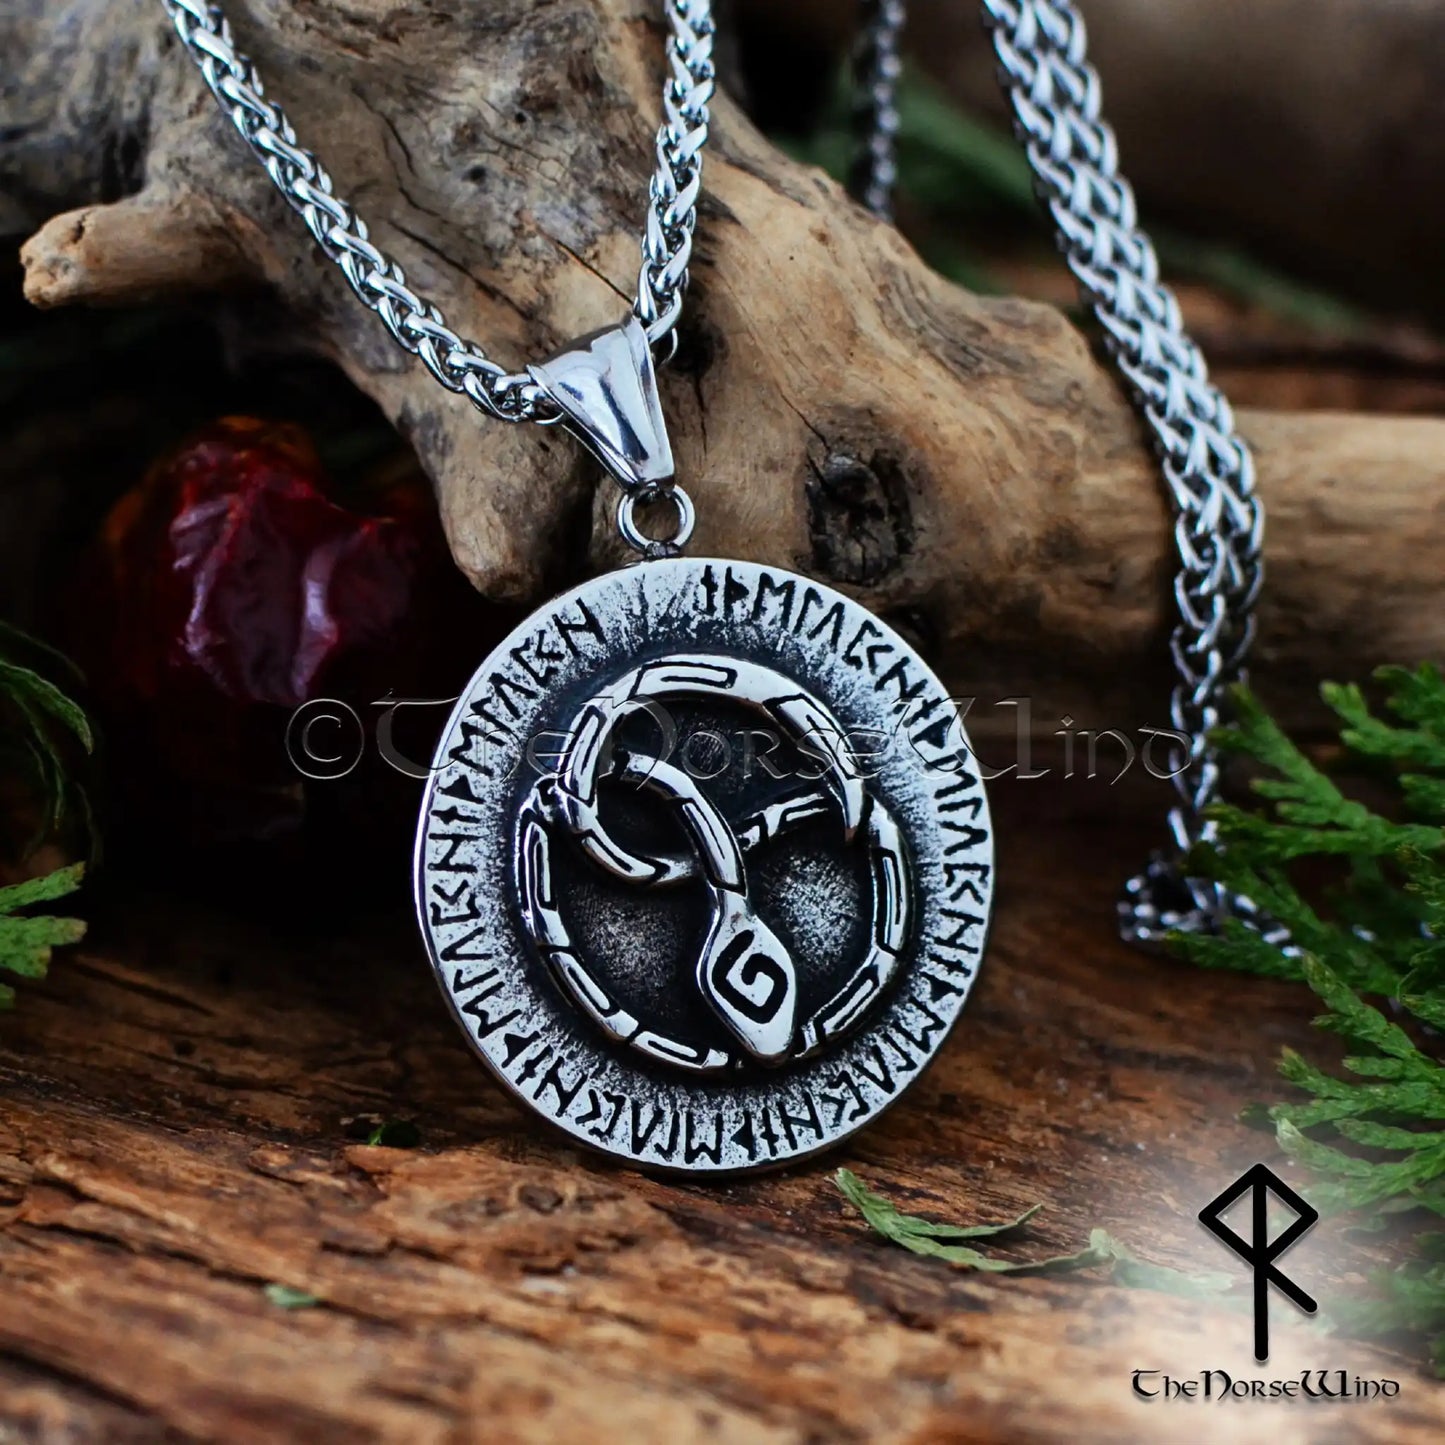 Jormungandr Midgard Schlangenhalskette, Wikinger-Runen-Amulett aus Edelstahl